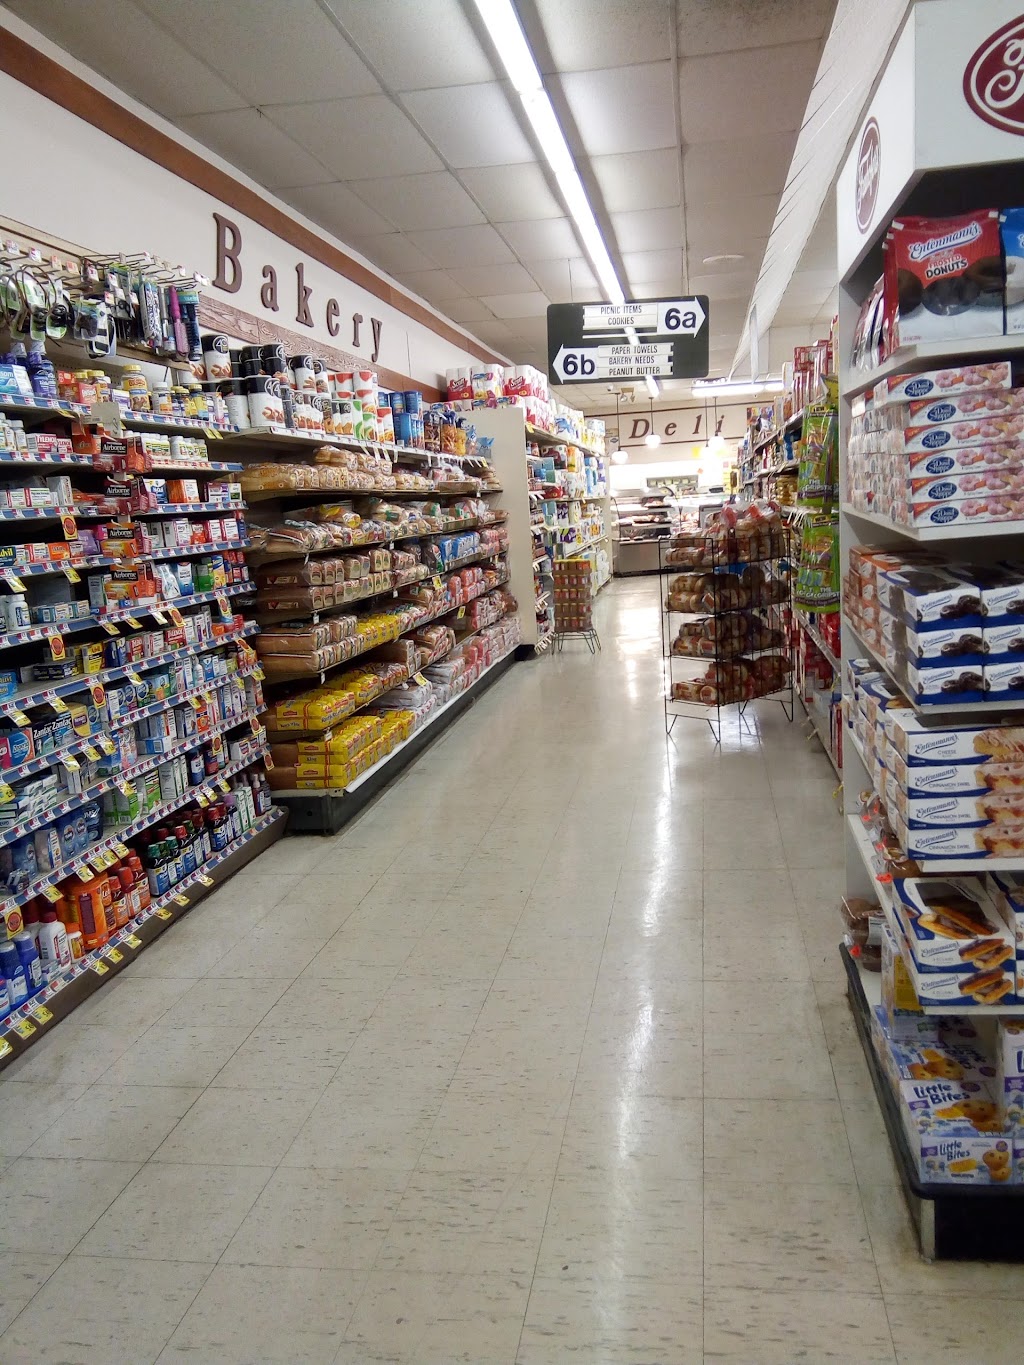 Big M Supermarket | 156 Front St, Deposit, NY 13754 | Phone: (607) 467-4749